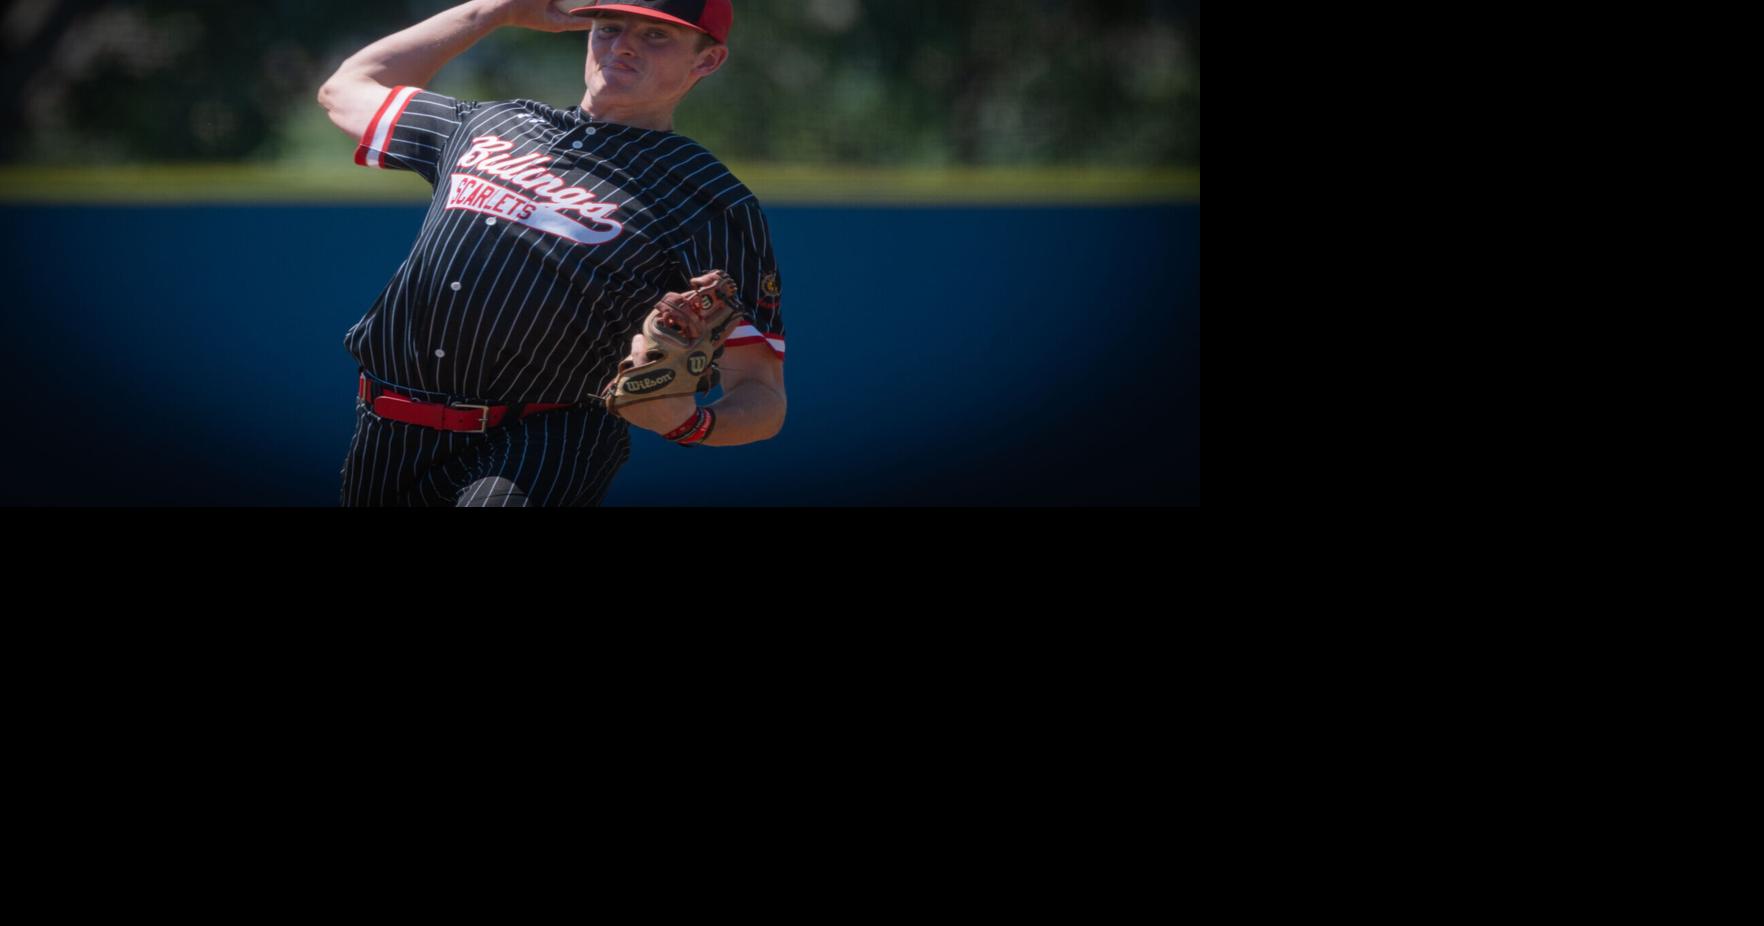 Mutli-sport Billings West star Drew McDowell to play baseball at South Dakota State